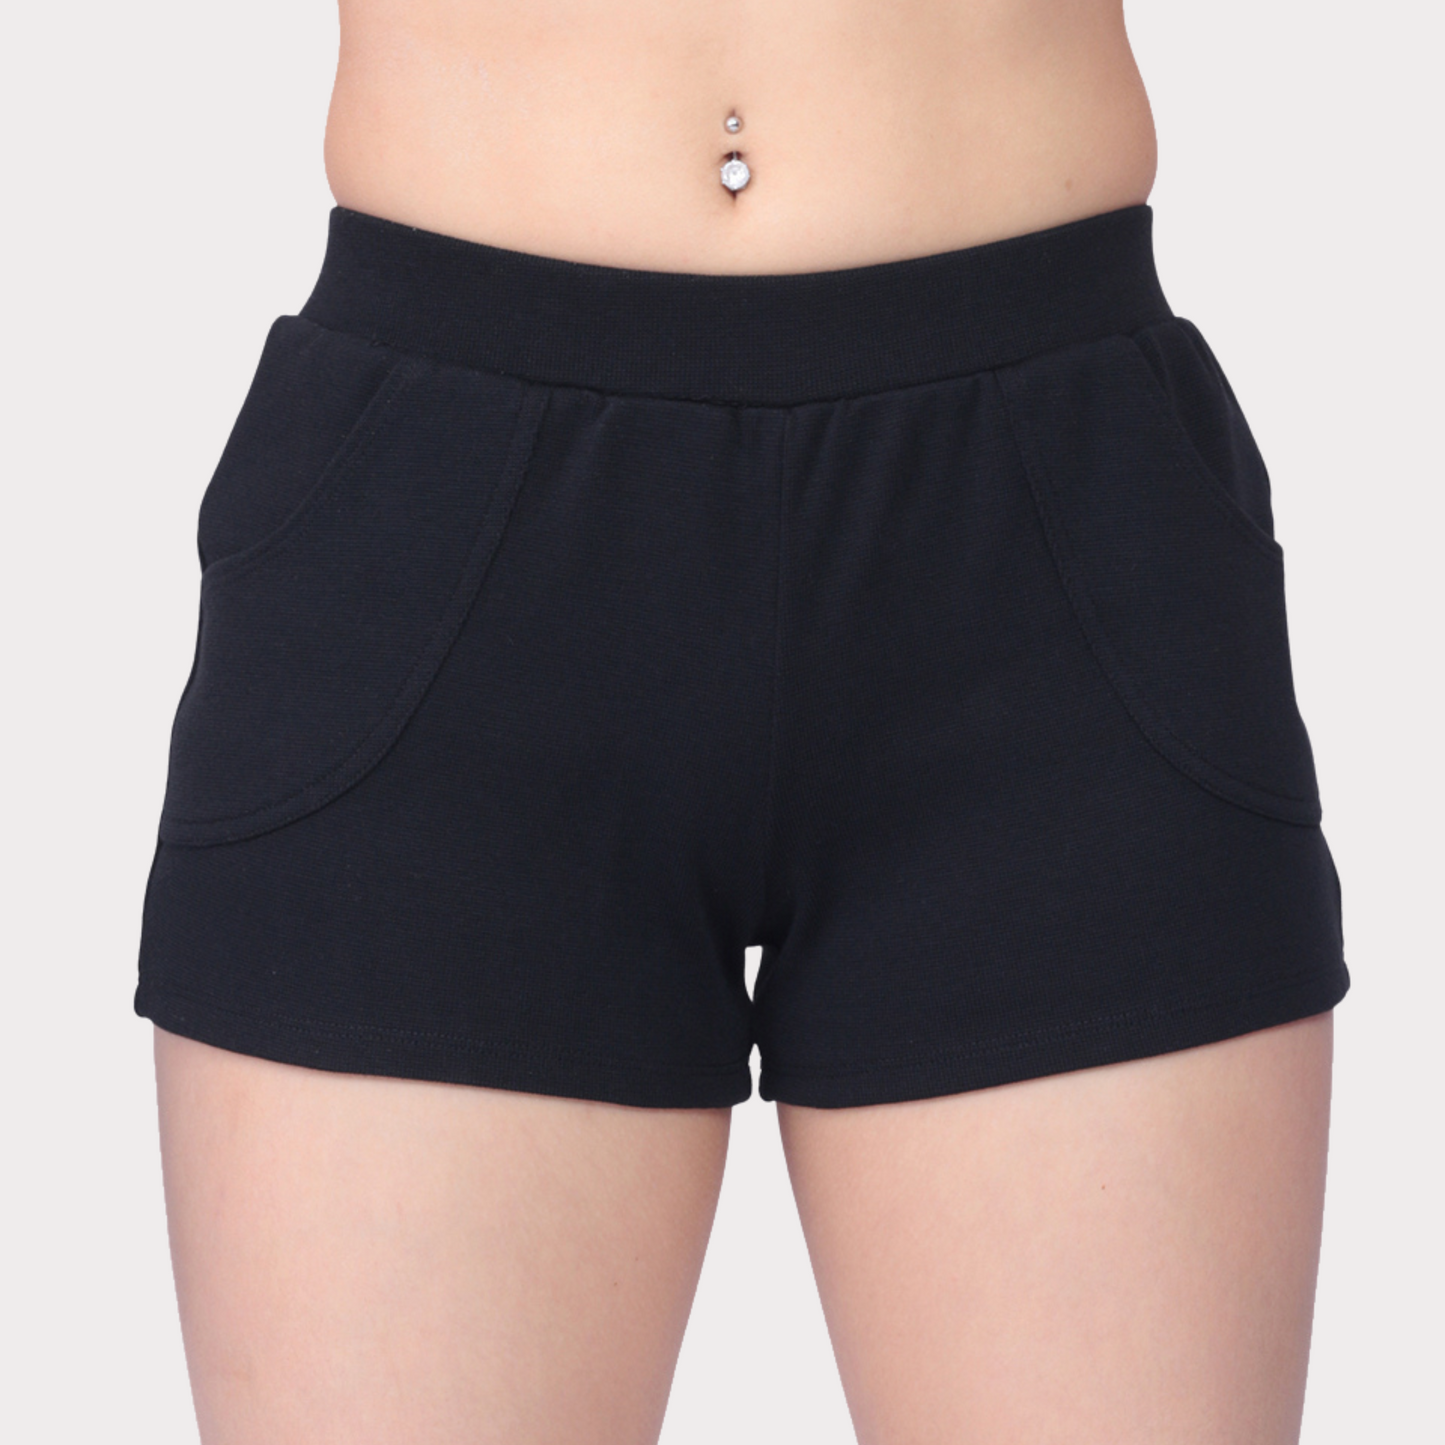 Women's Shorts Activewear / Sportswear - Women's Mini Ribbed Shorts - S / Black - Outperformer